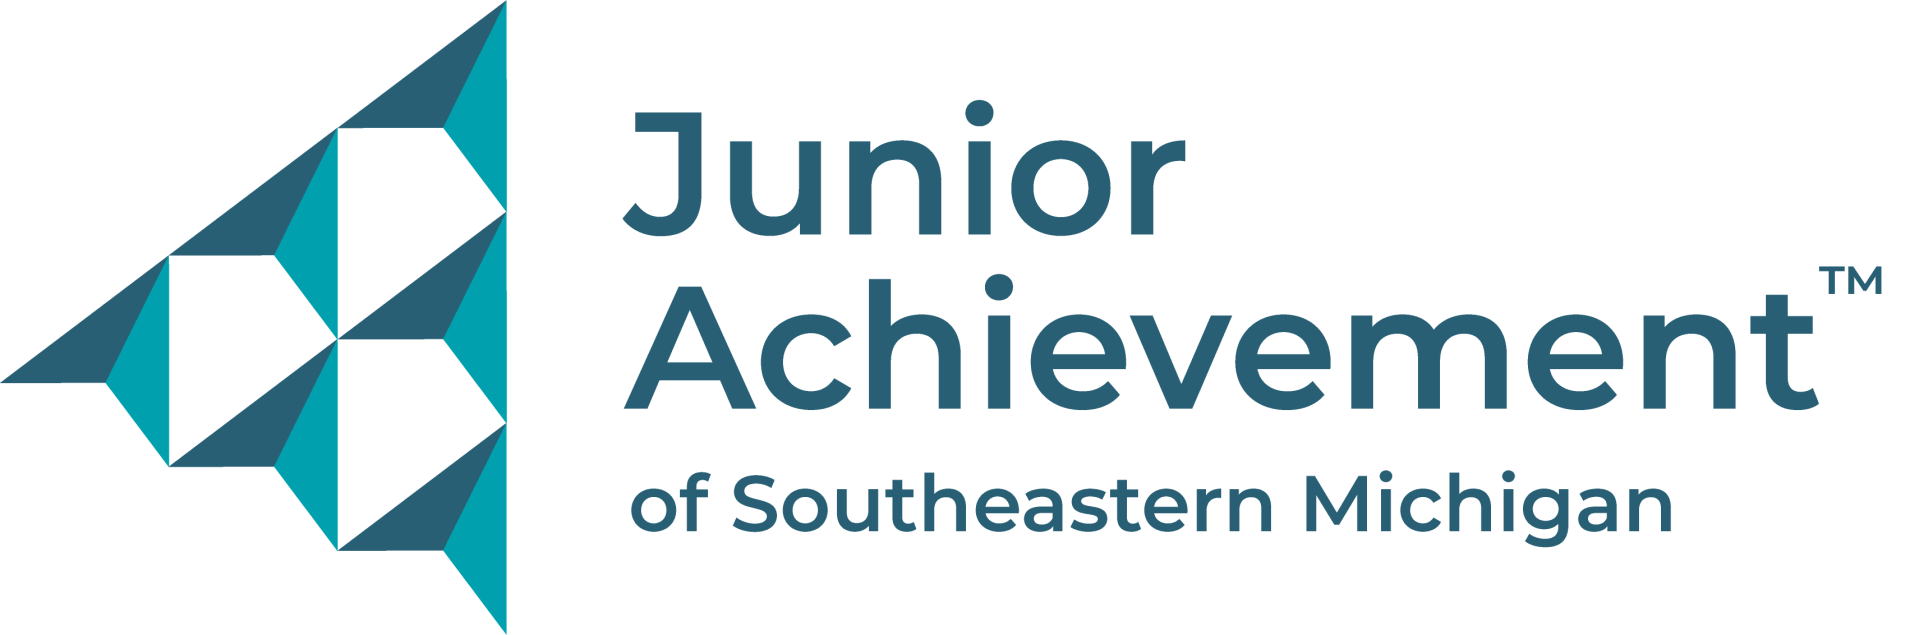 Junior Achievement of Southeastern Michigan